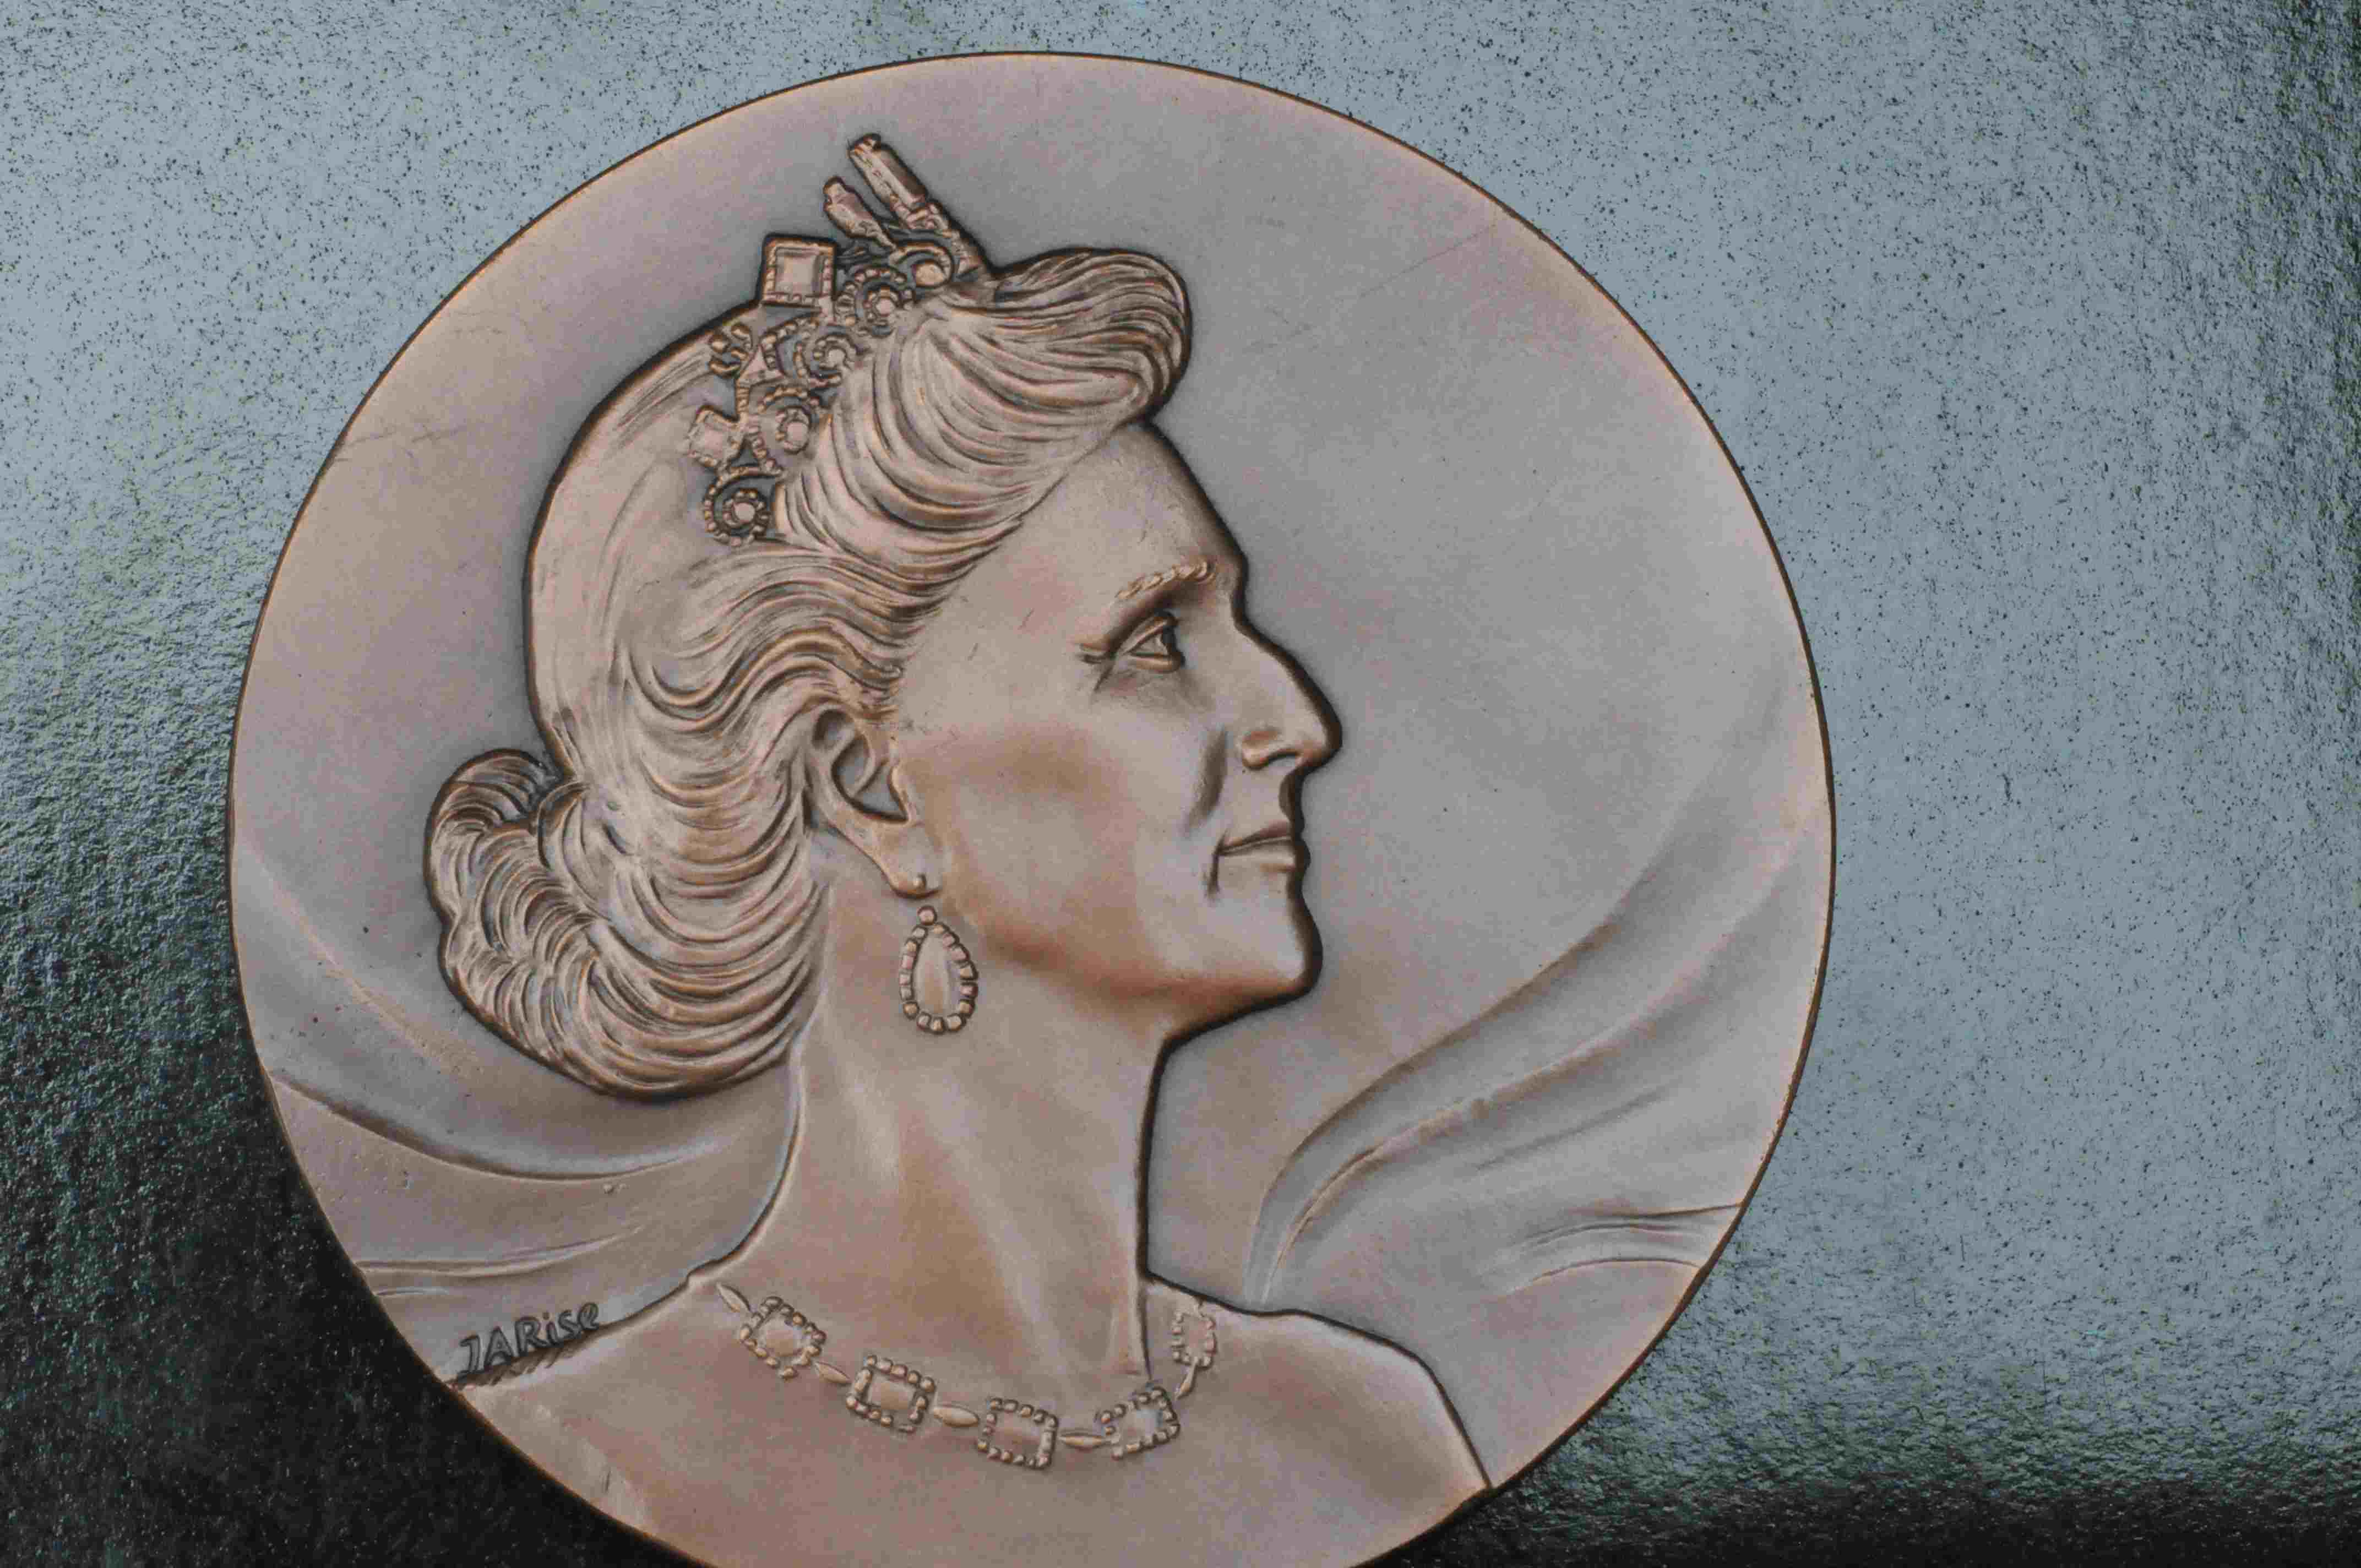 HM Dronning Sonja 4 juli 1997 bronse 195g 70mmdi